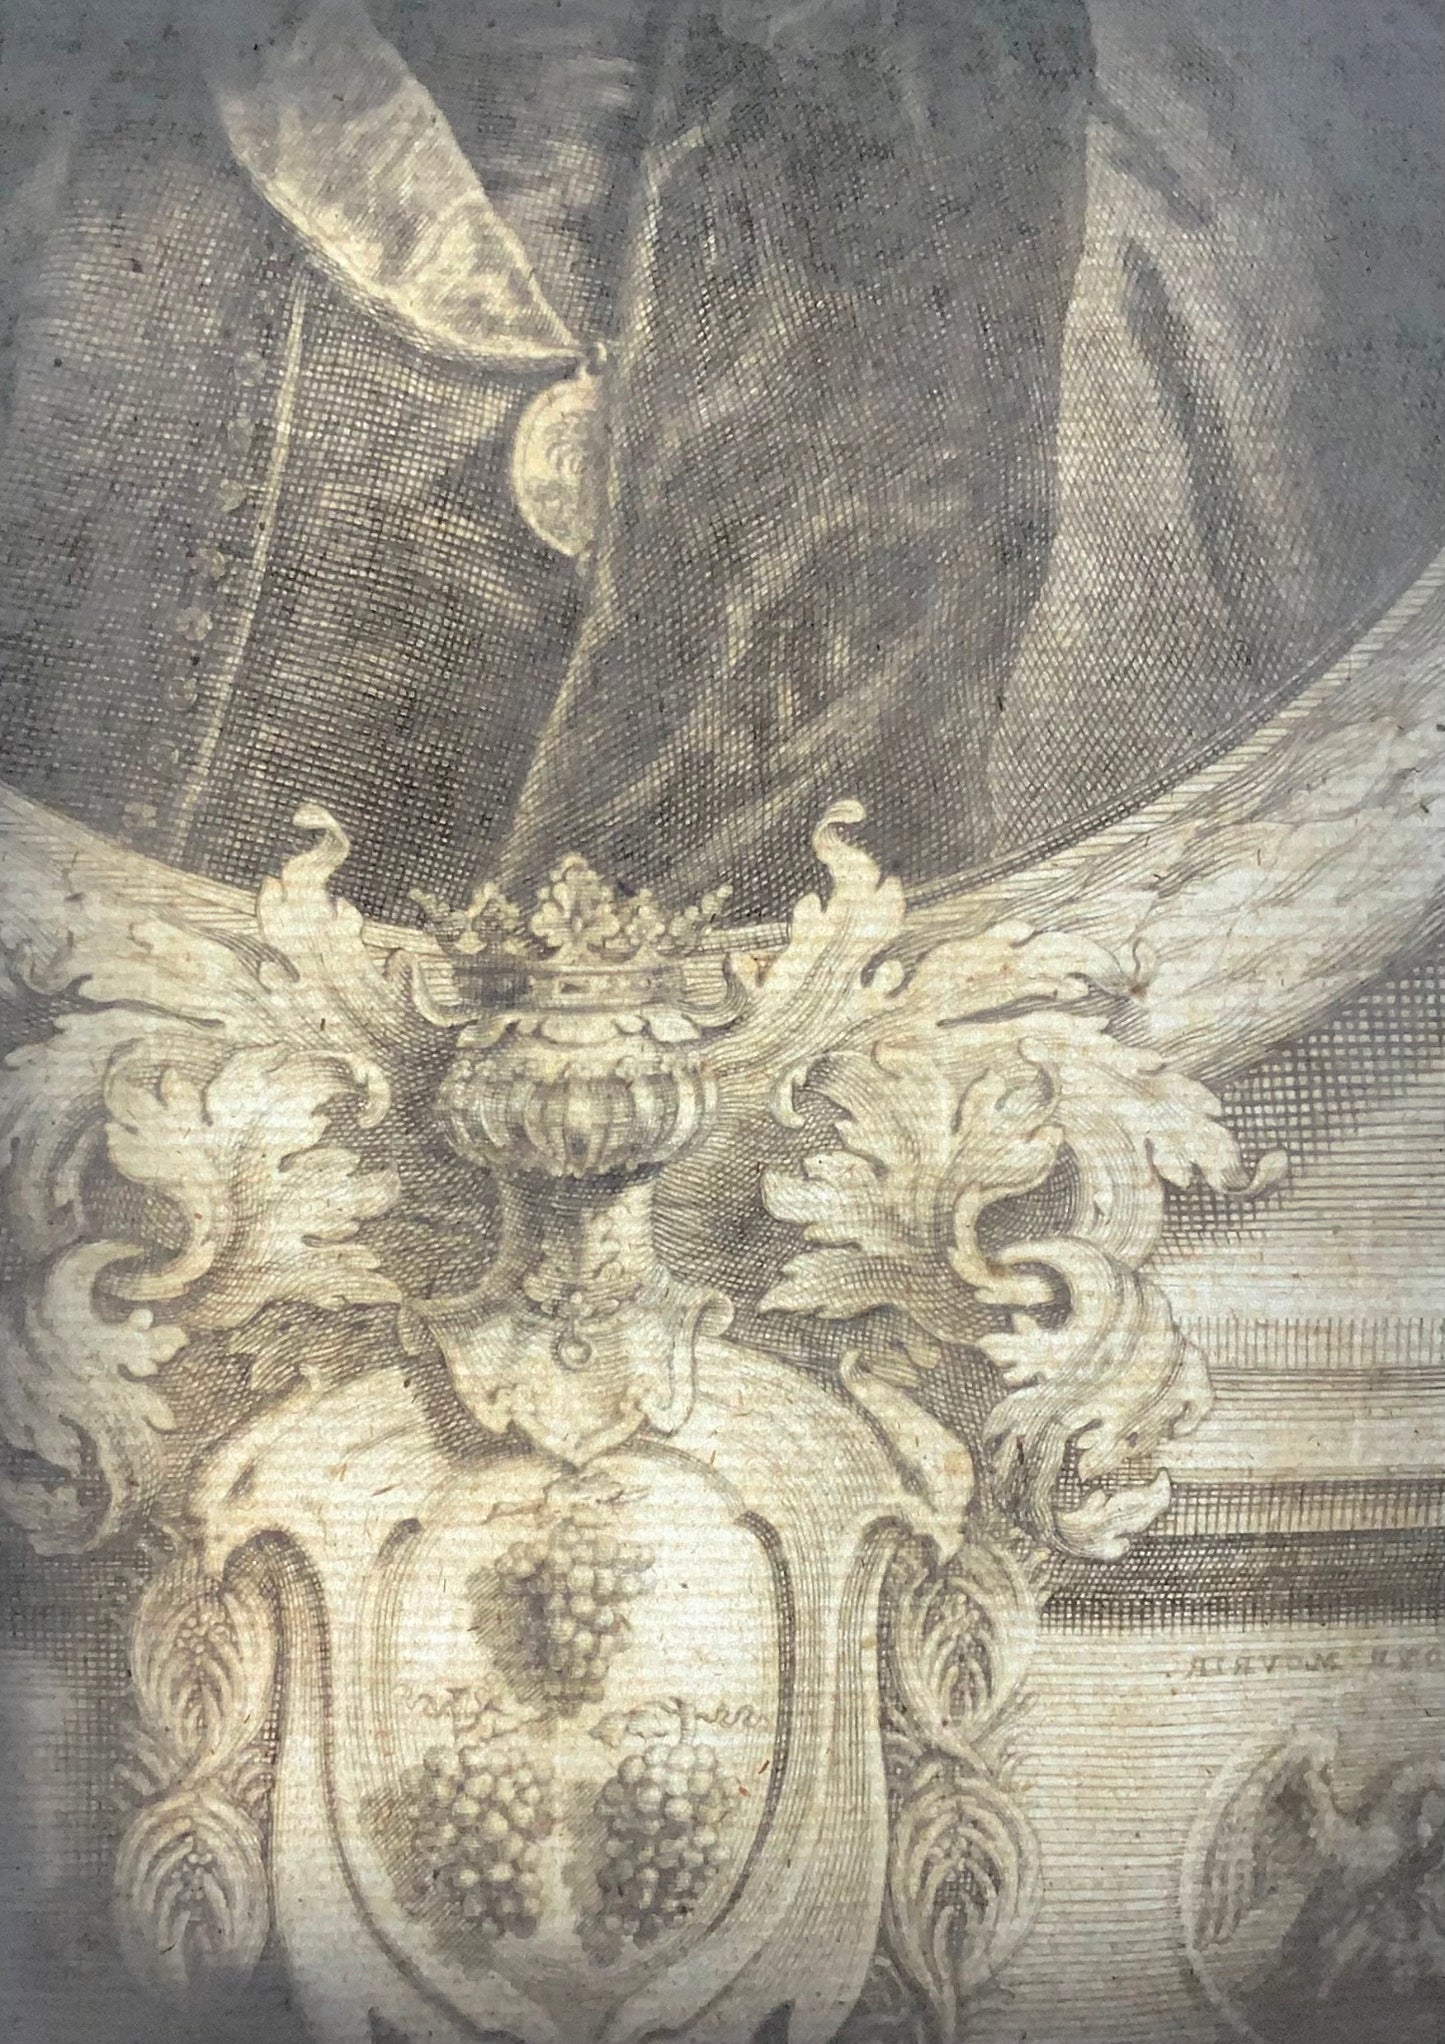 1679 J.J. Sandrart, folio portrait by R Collin engraving